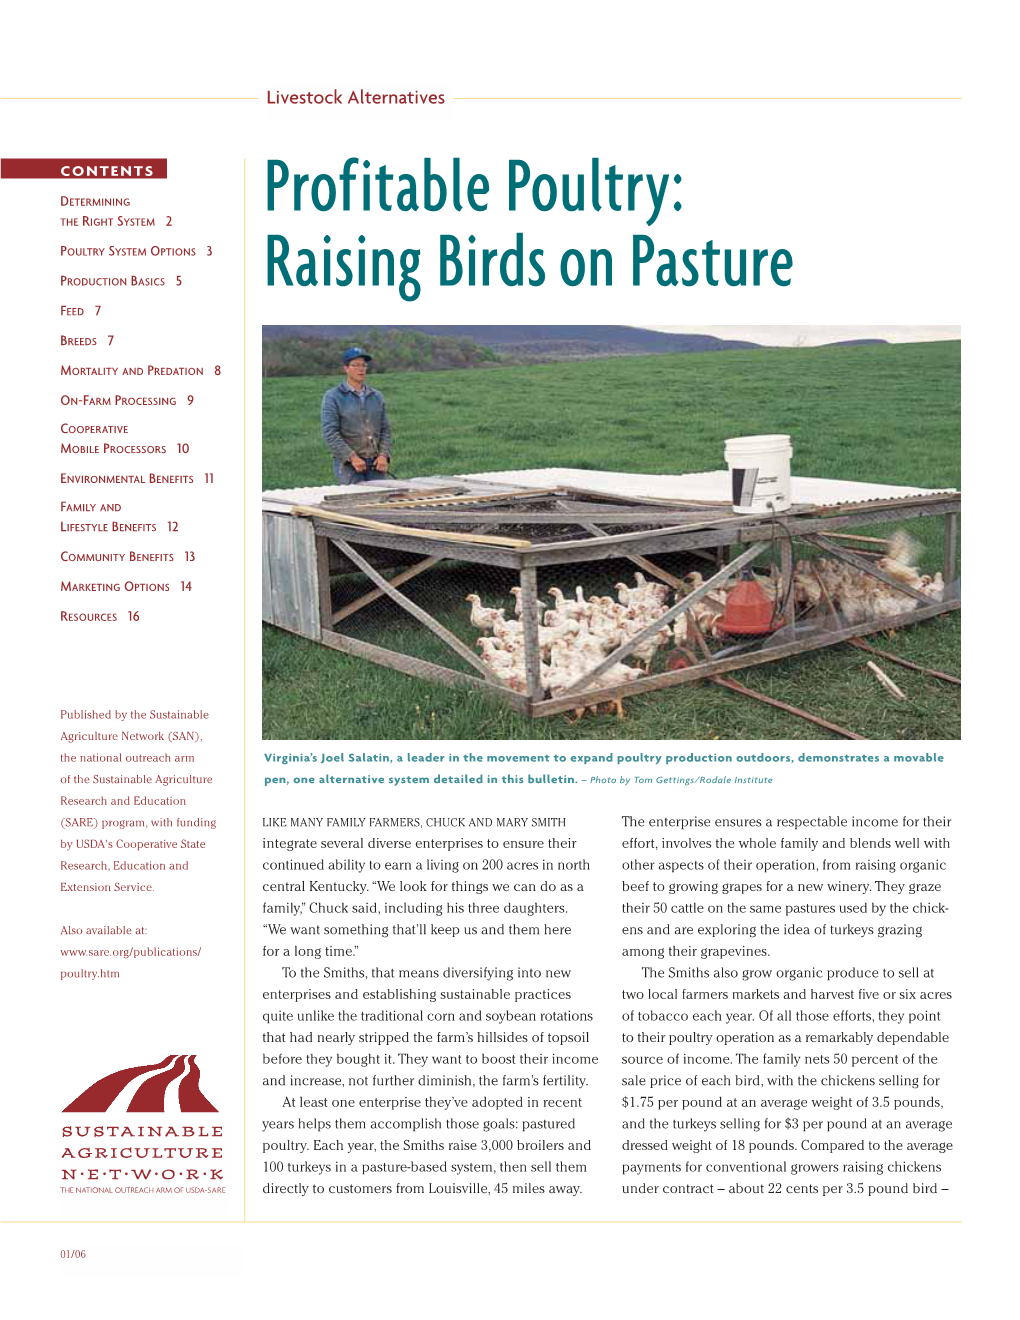 Profitable Poultry: Raising Birds on Pasture